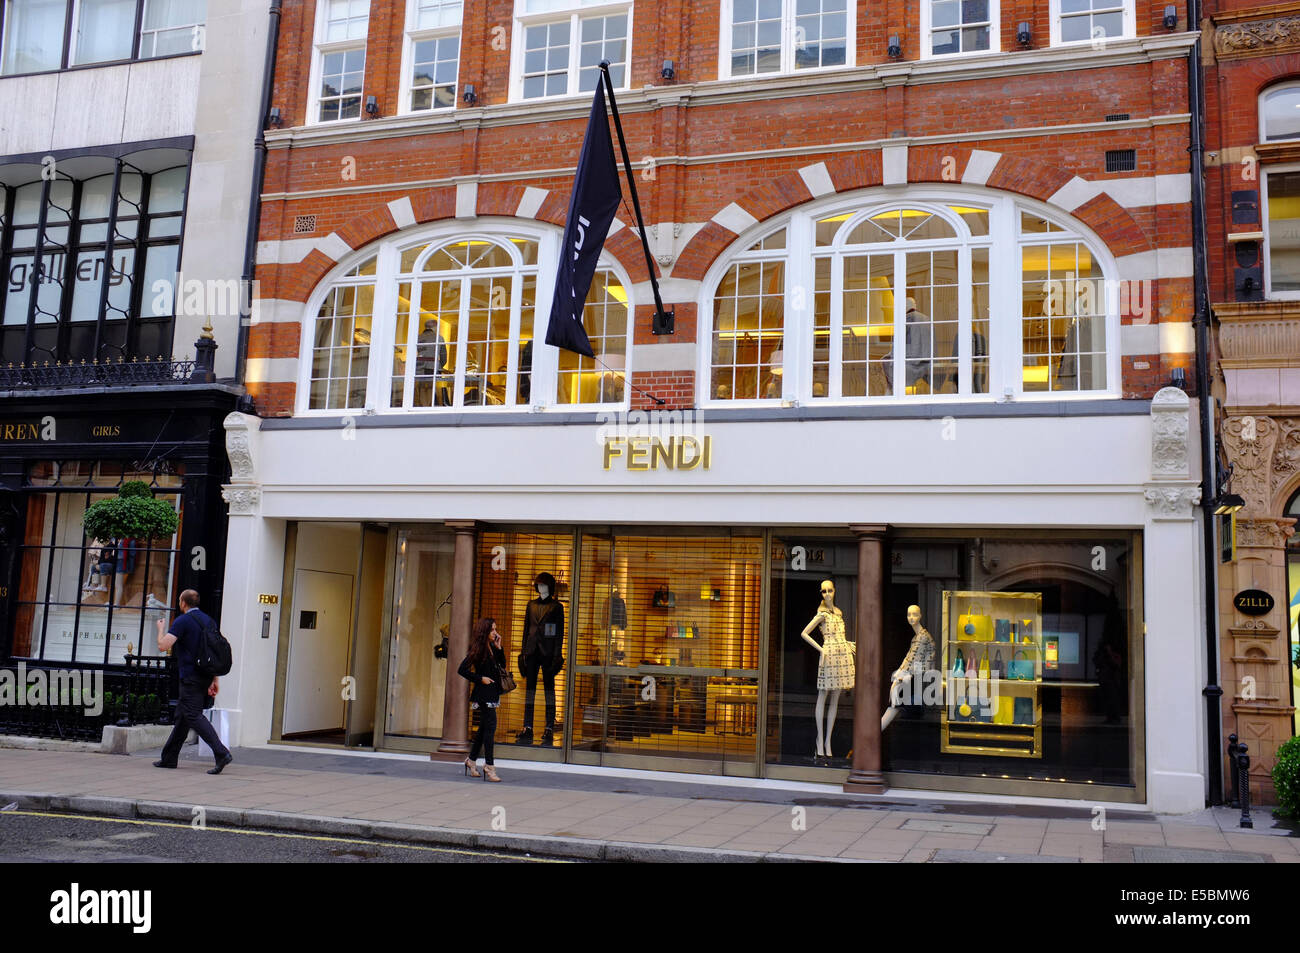 FENDI designer fashion store on Bond Street, London Stock Photo - Alamy